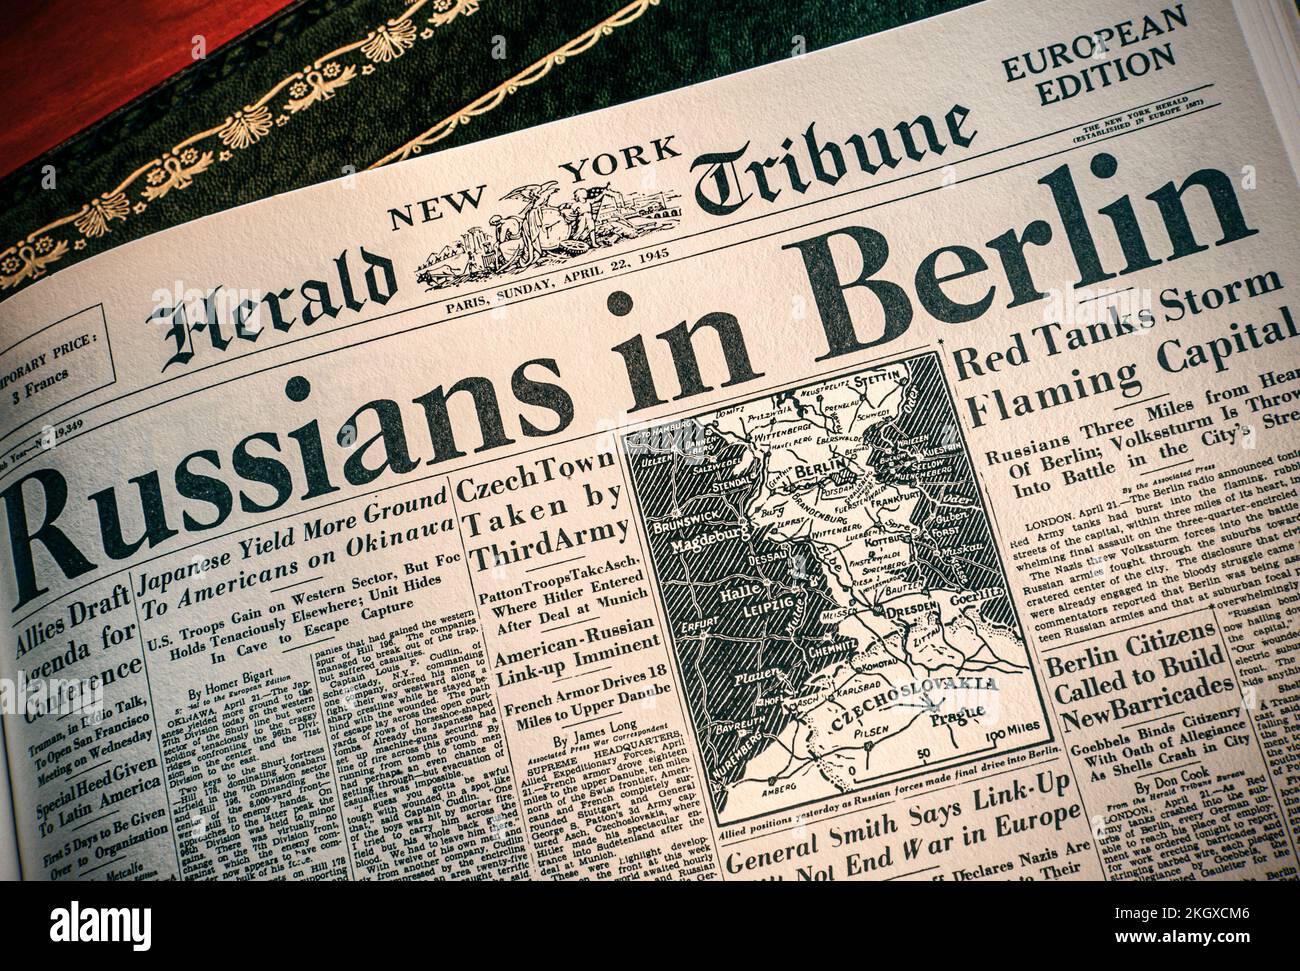 BERLIN WW2 RUSSIA NAZI GERMANY Herald Tribune April 22 1945 Newspaper Headline 'Russians in Berlin' Nazi regime & World War II ending news front page Stock Photo